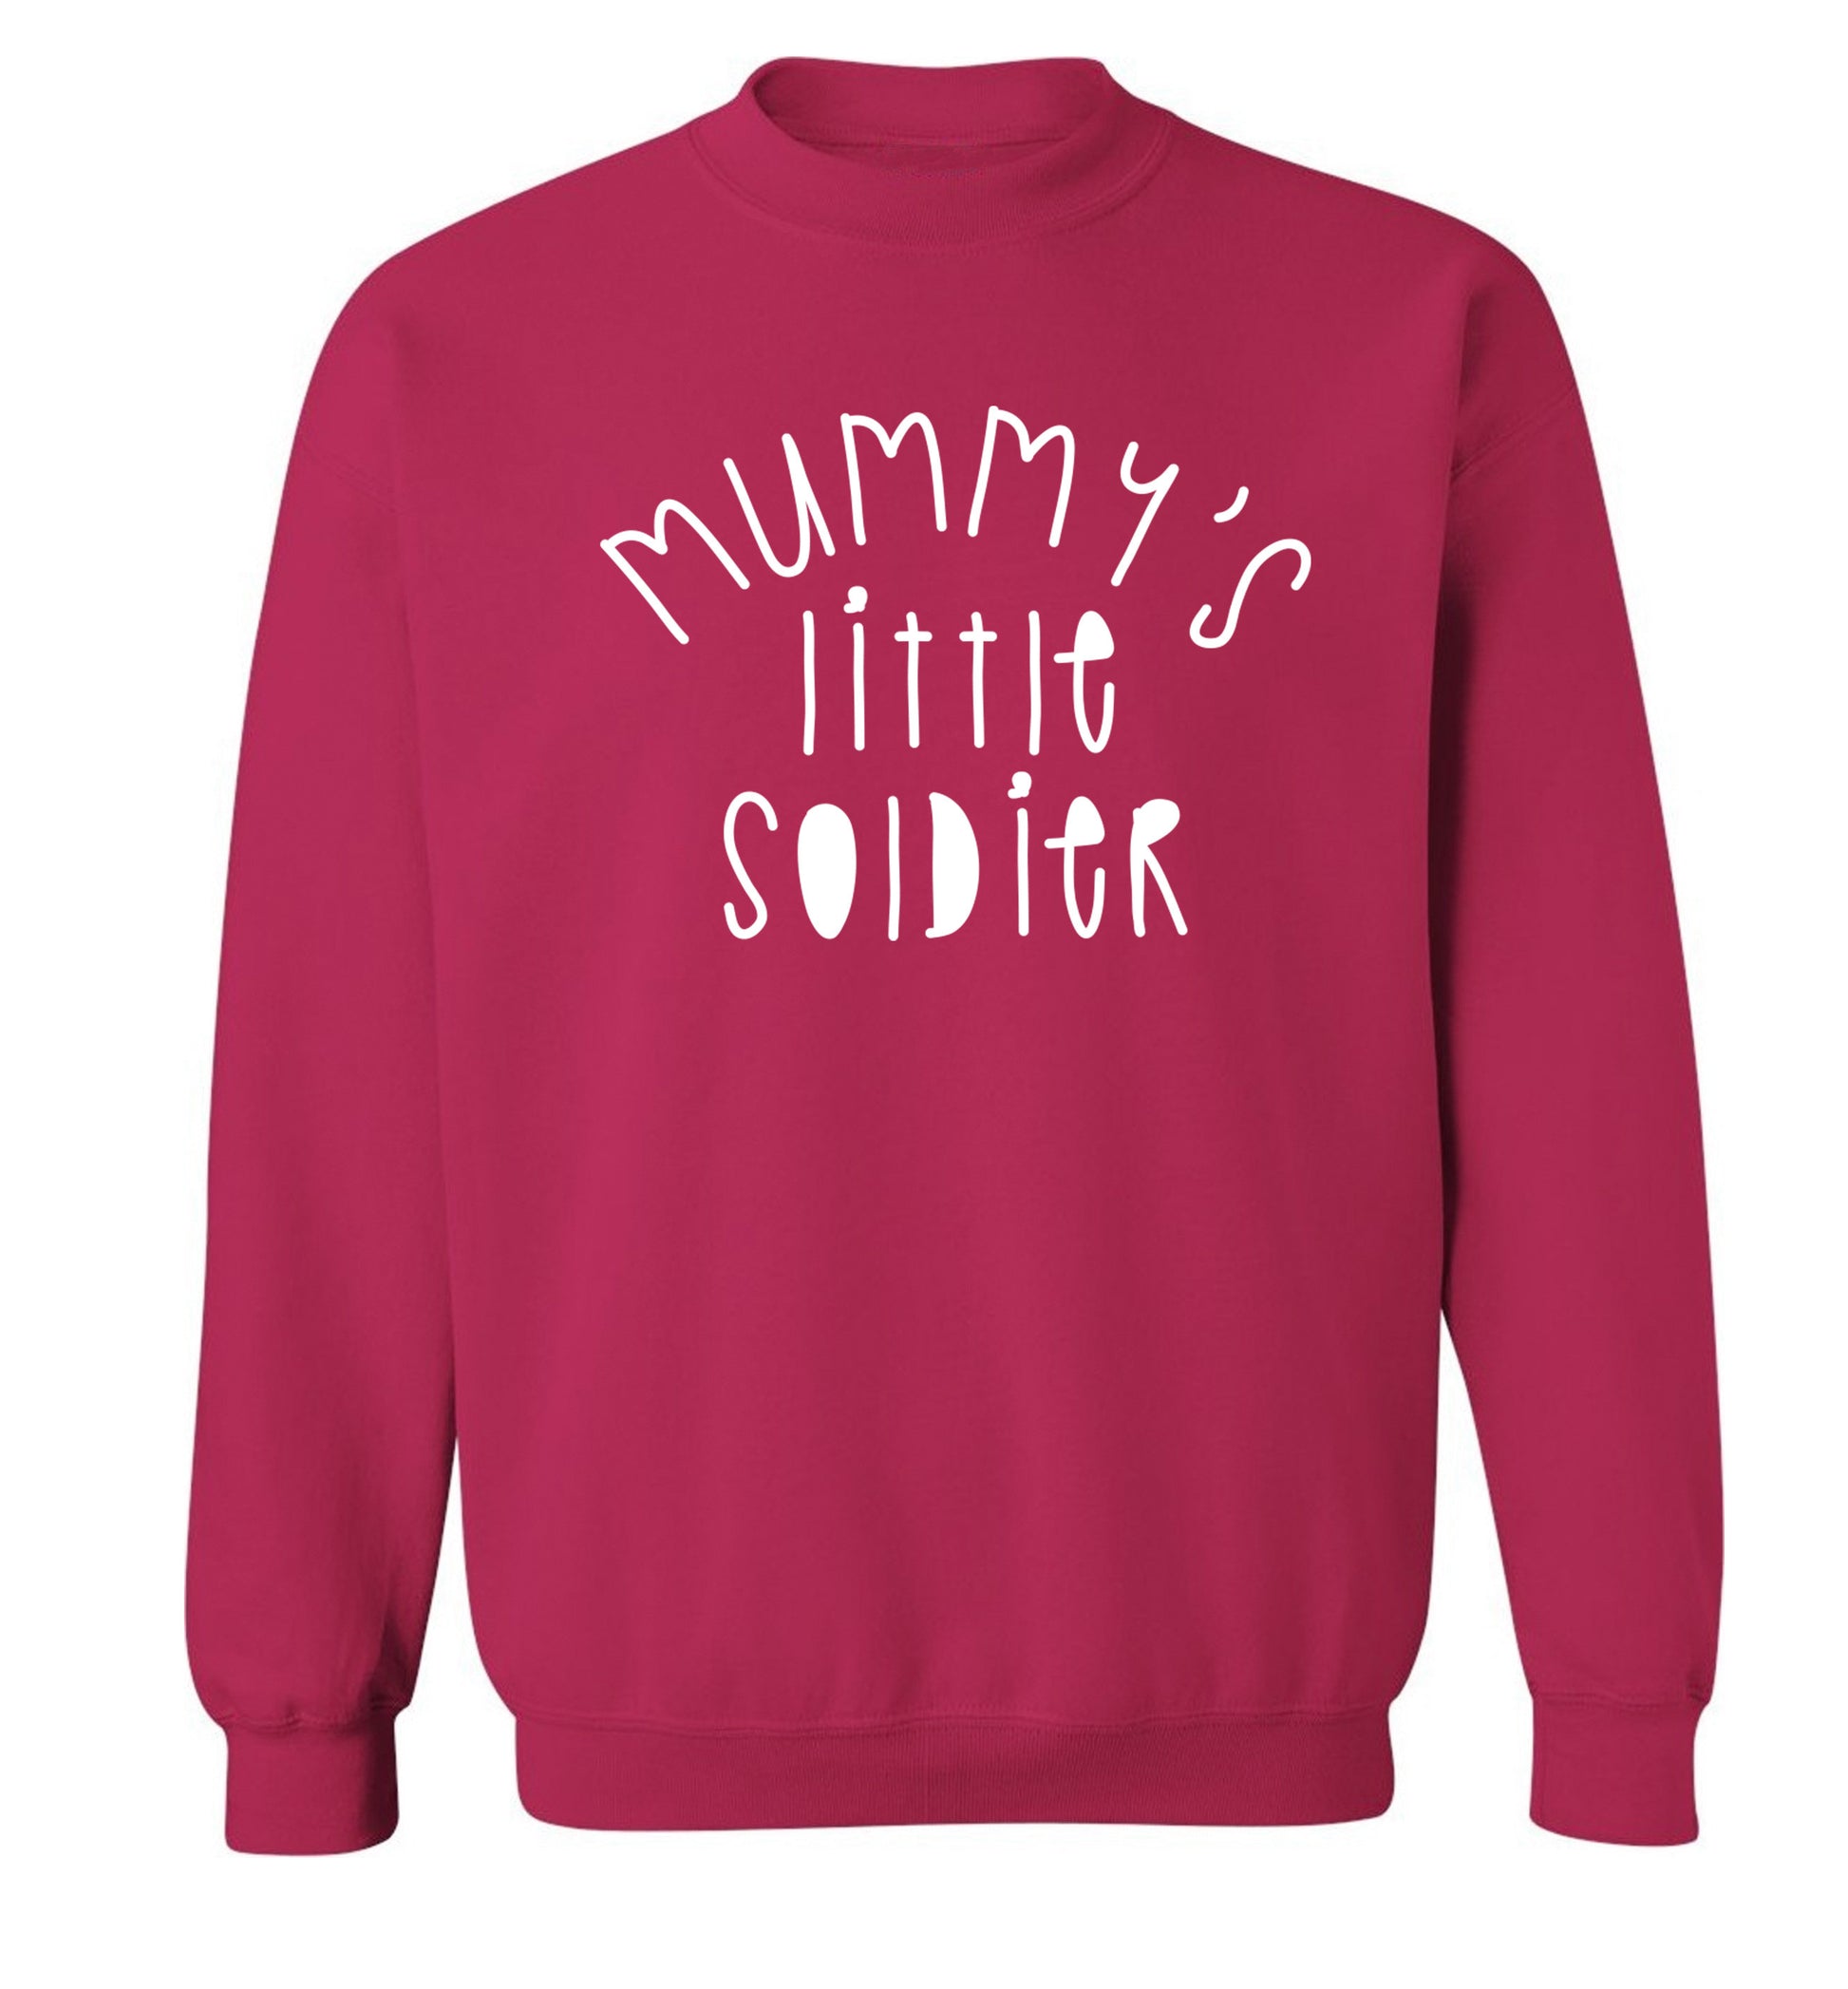 Mummy's little soldier Adult's unisex pink Sweater 2XL